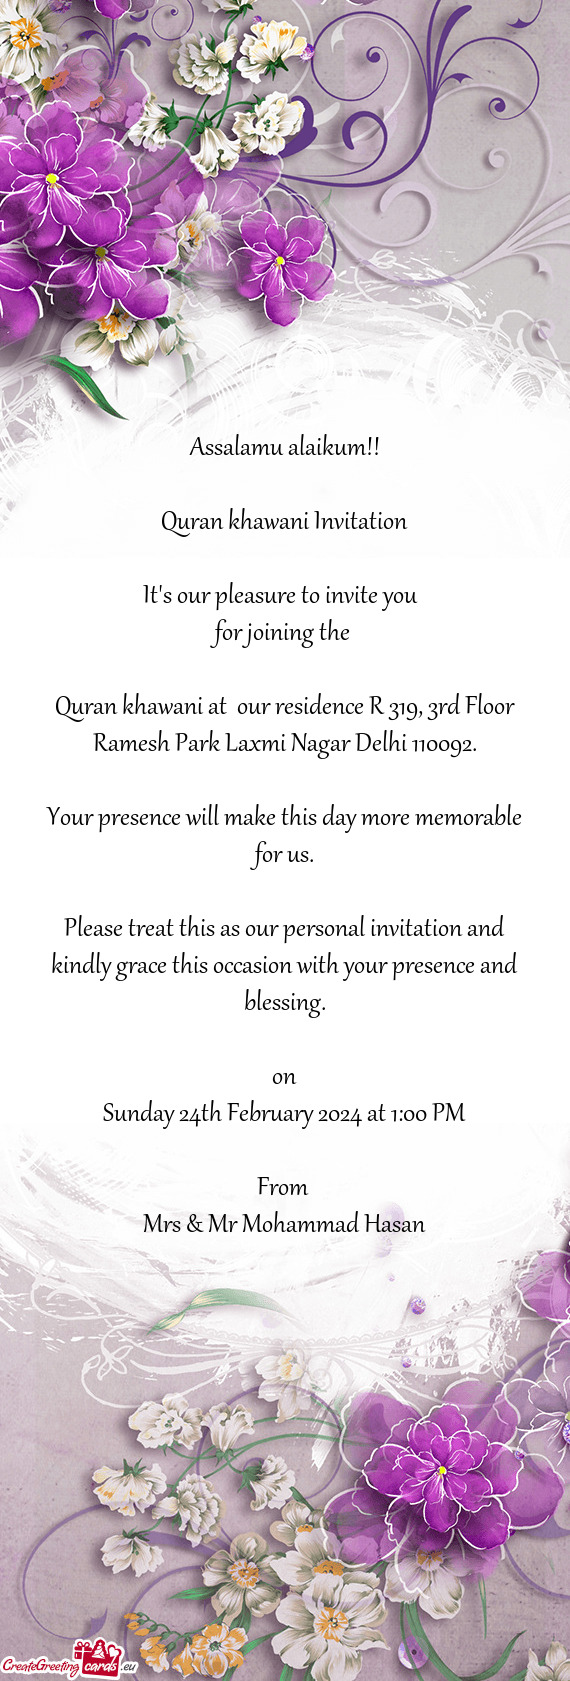 Quran khawani at our residence R 319, 3rd Floor Ramesh Park Laxmi Nagar Delhi 110092